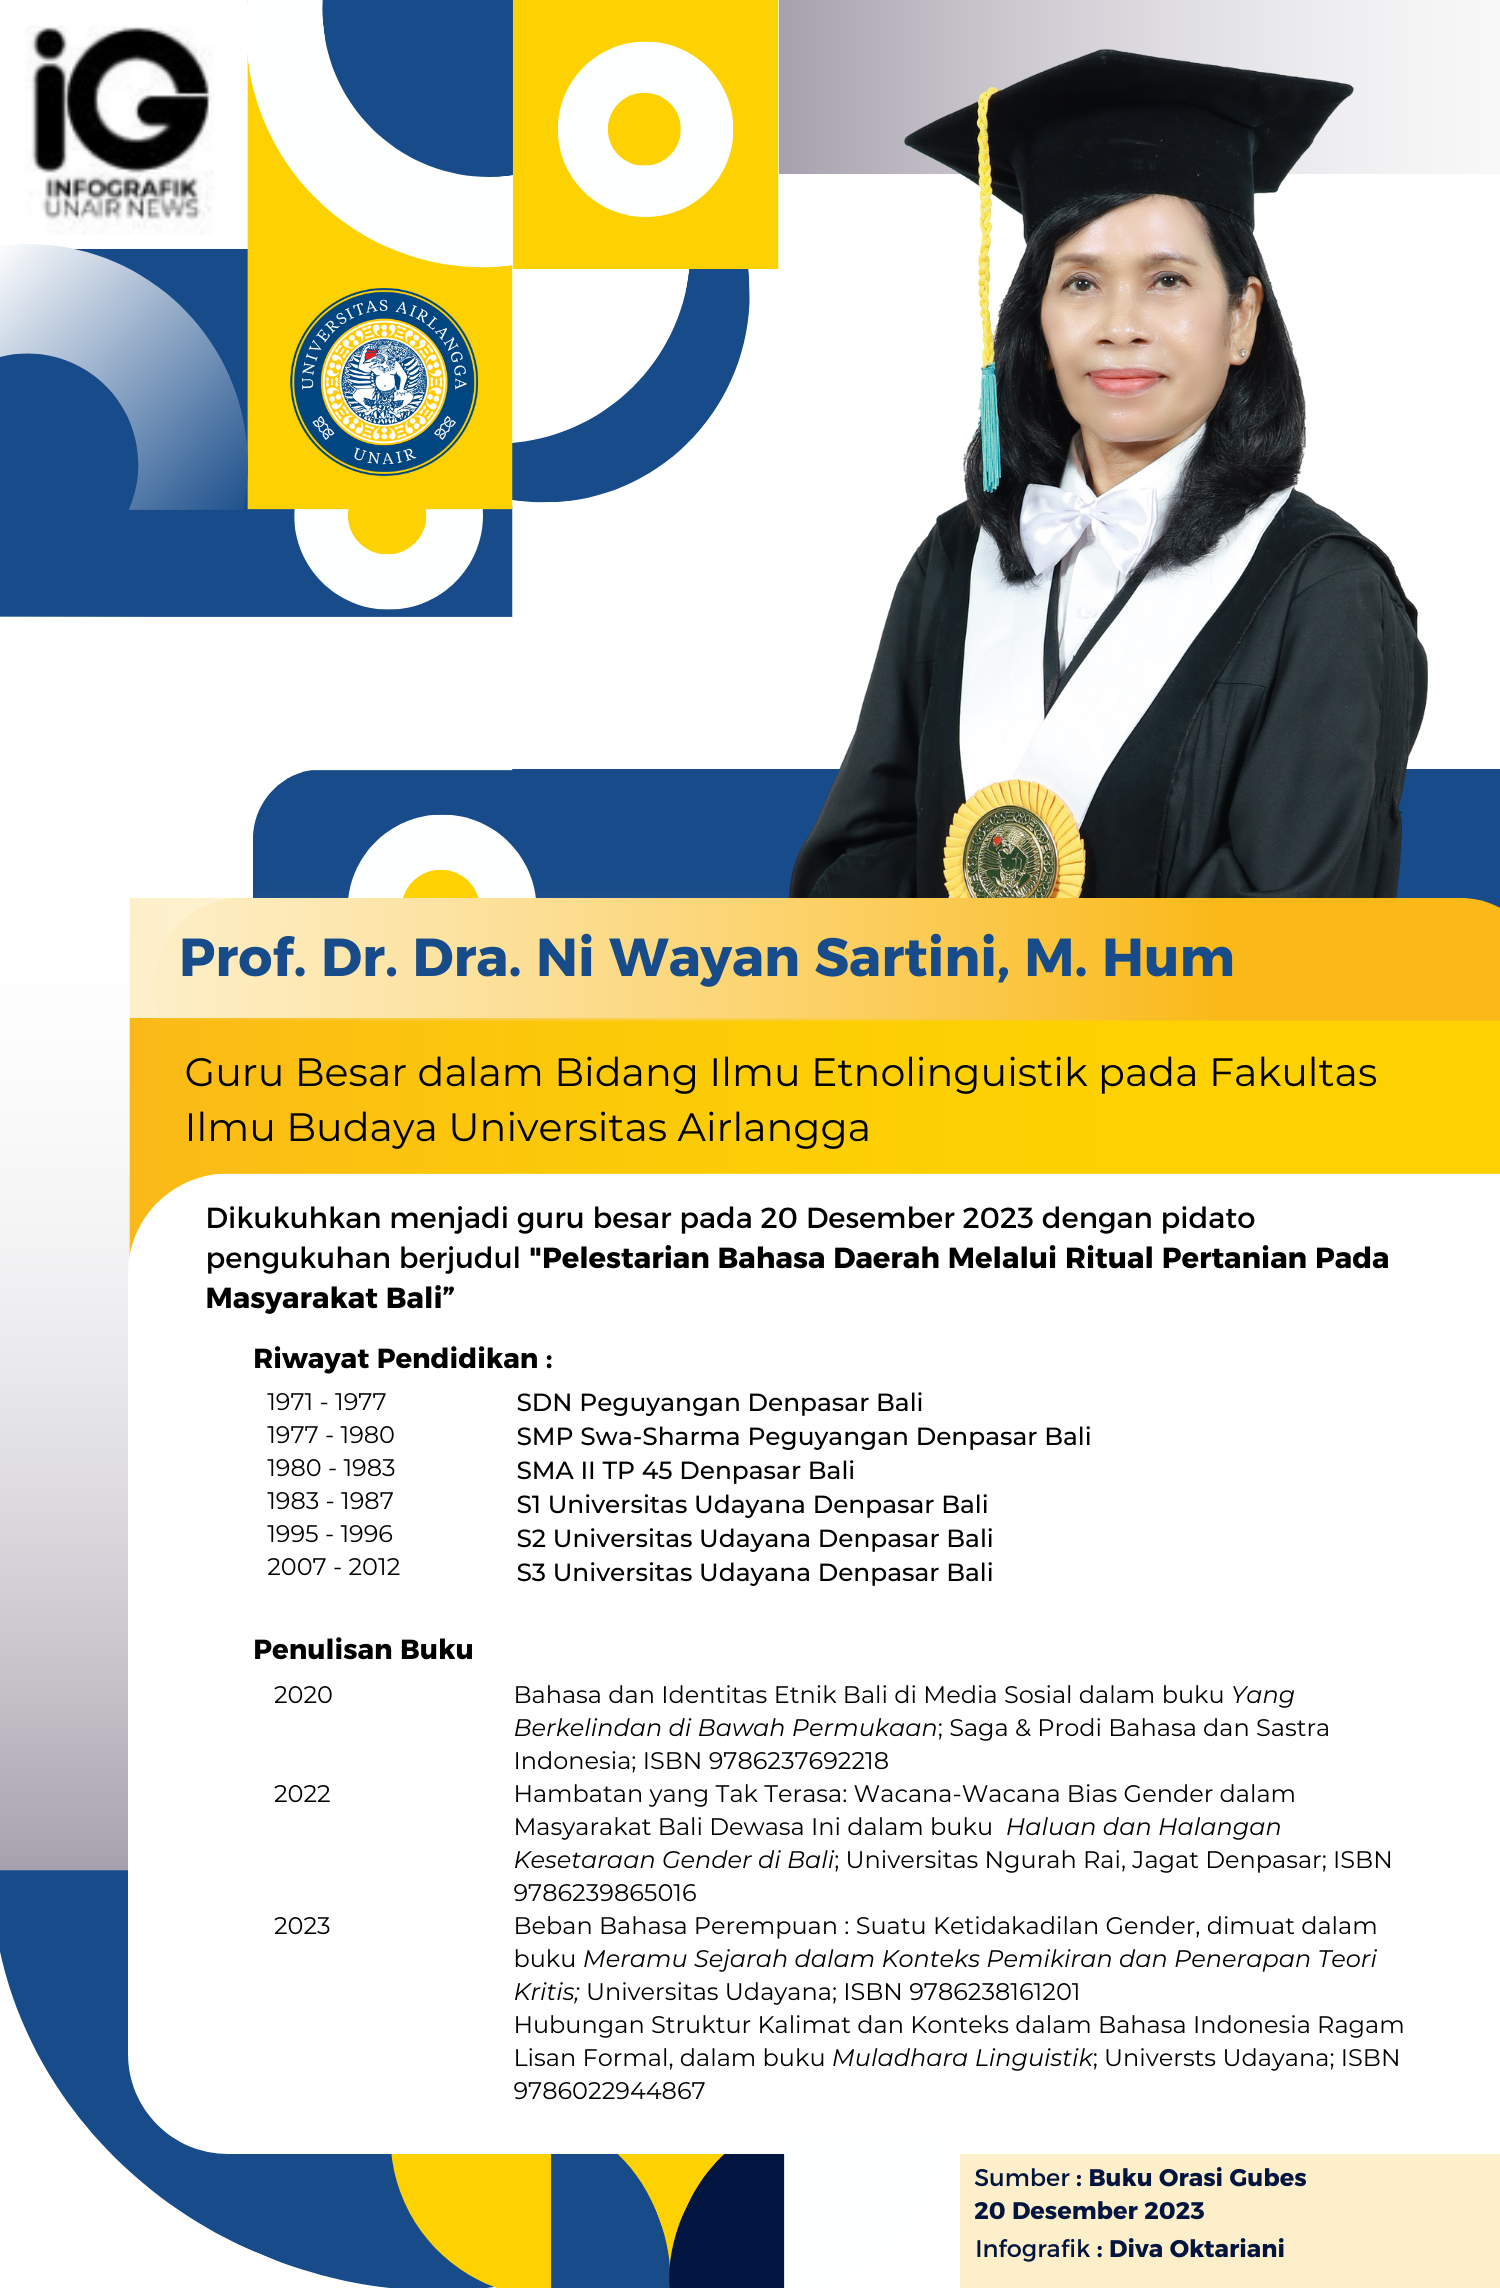 UNAIR NEWS – Pengukuhan guru besar Prof. Dr. Dra. Ni Wayan Sartini, M. Hum pada 20 Desember 2023. Beliau menyampaikan pidato pengukuhan yang berjudul “Pelestarian Bahasa Daerah Melalui Ritual Pertanian Pada Masyarakat Bali”.